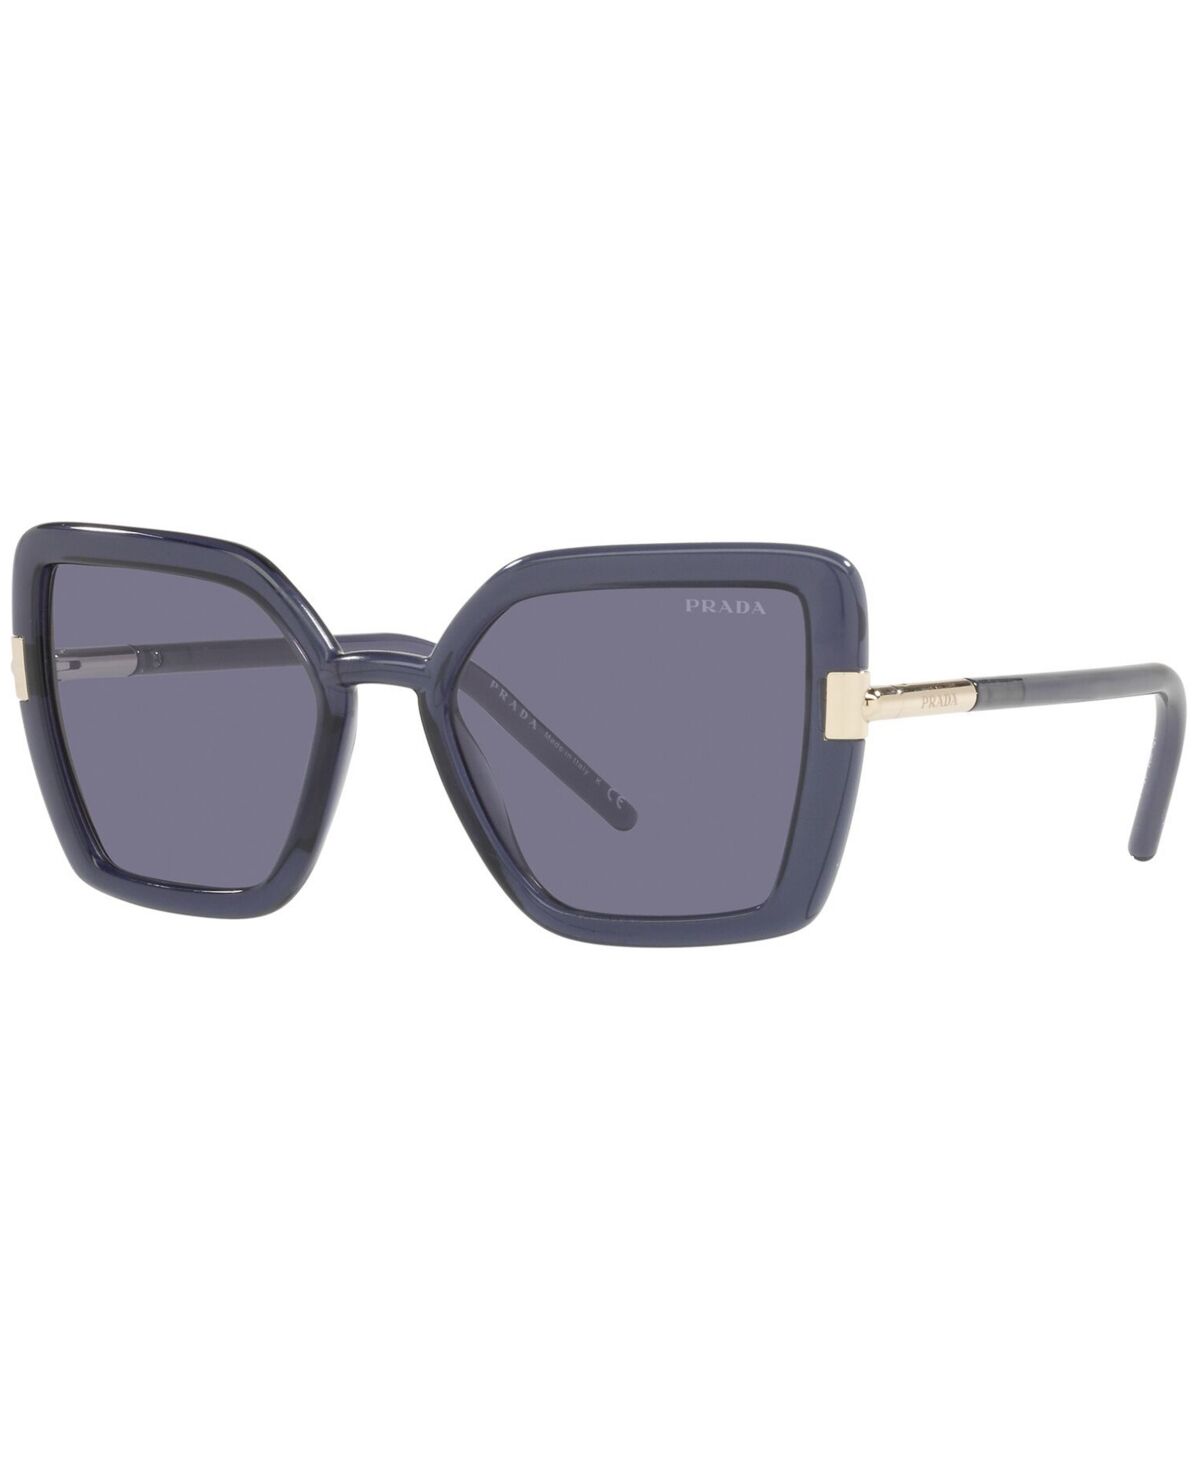 Prada Women's Sunglasses, Pr 09WS 54 - CRYSTAL BLUETTE/BLUE